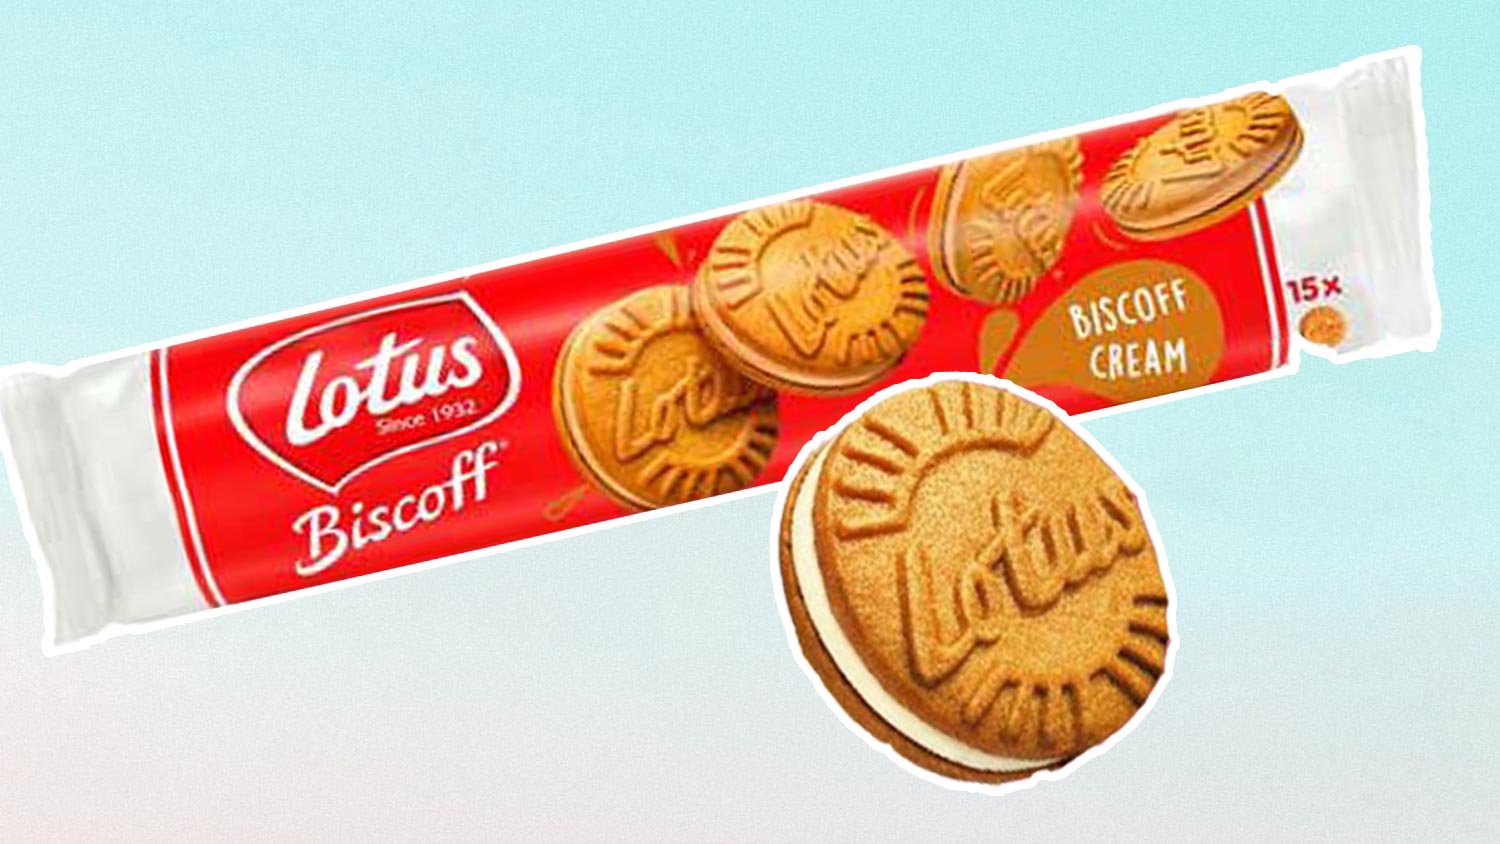 Lotus Just Launched Vegan Creme Biscoff Sandwich Cookies